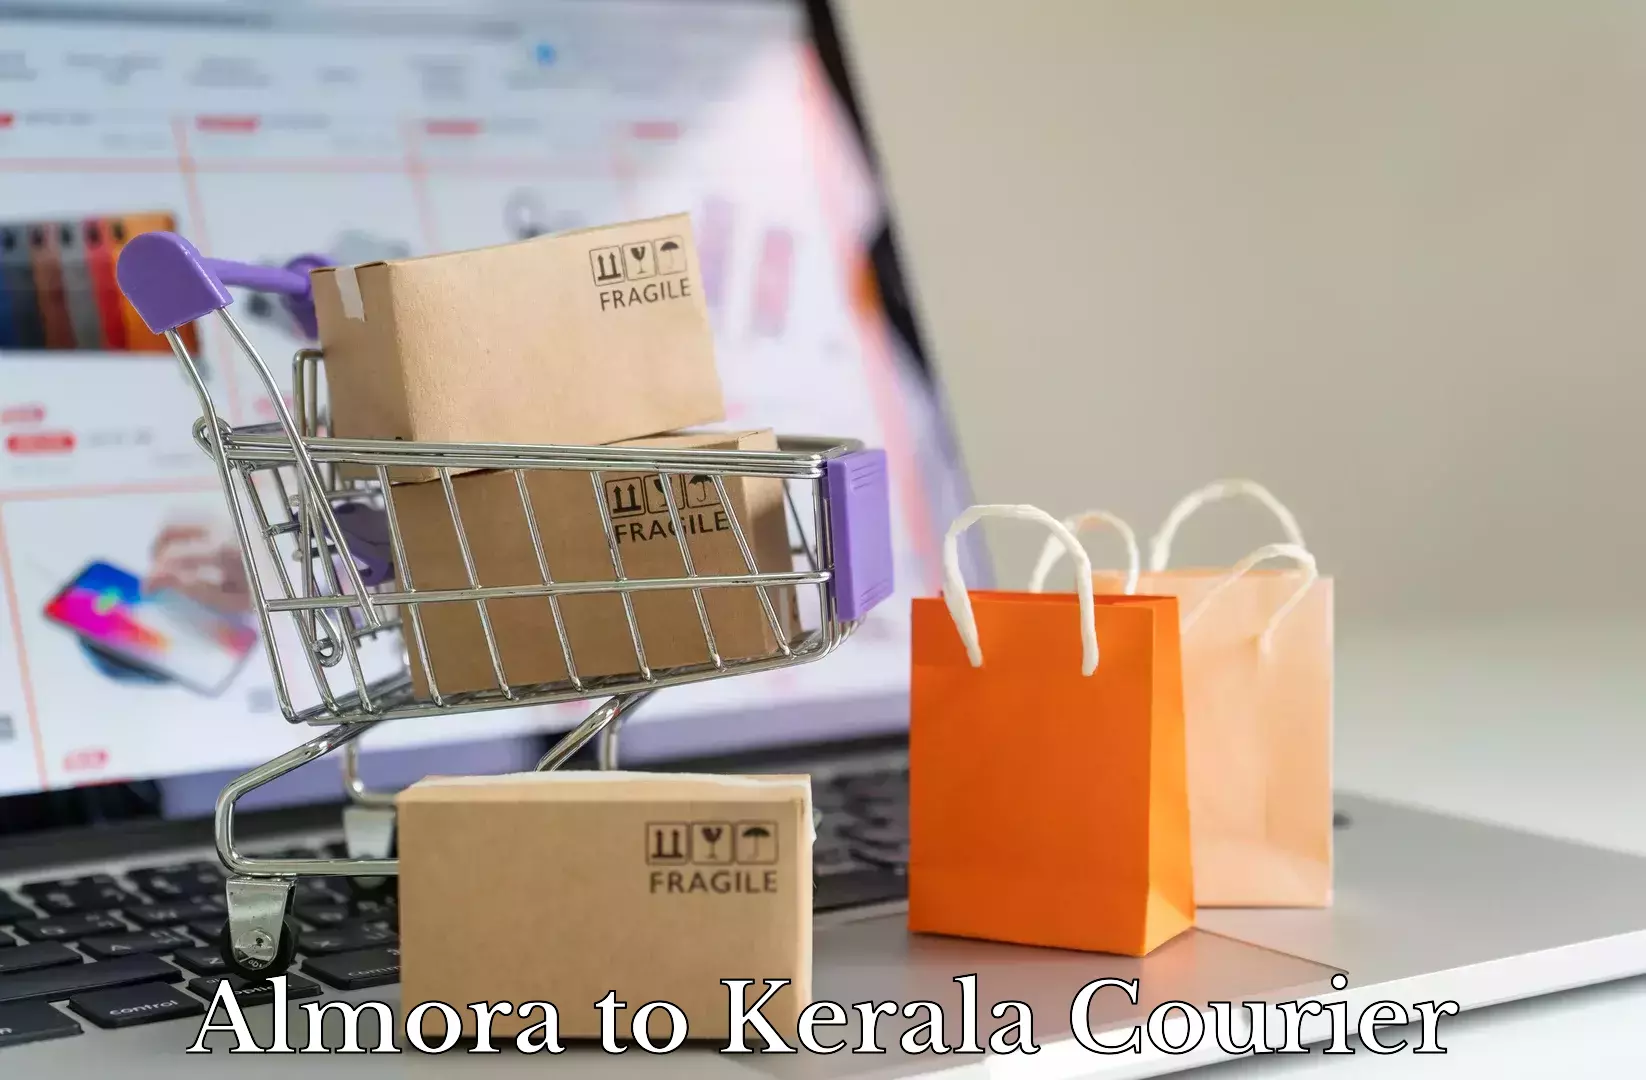 Seamless moving process in Almora to Kerala